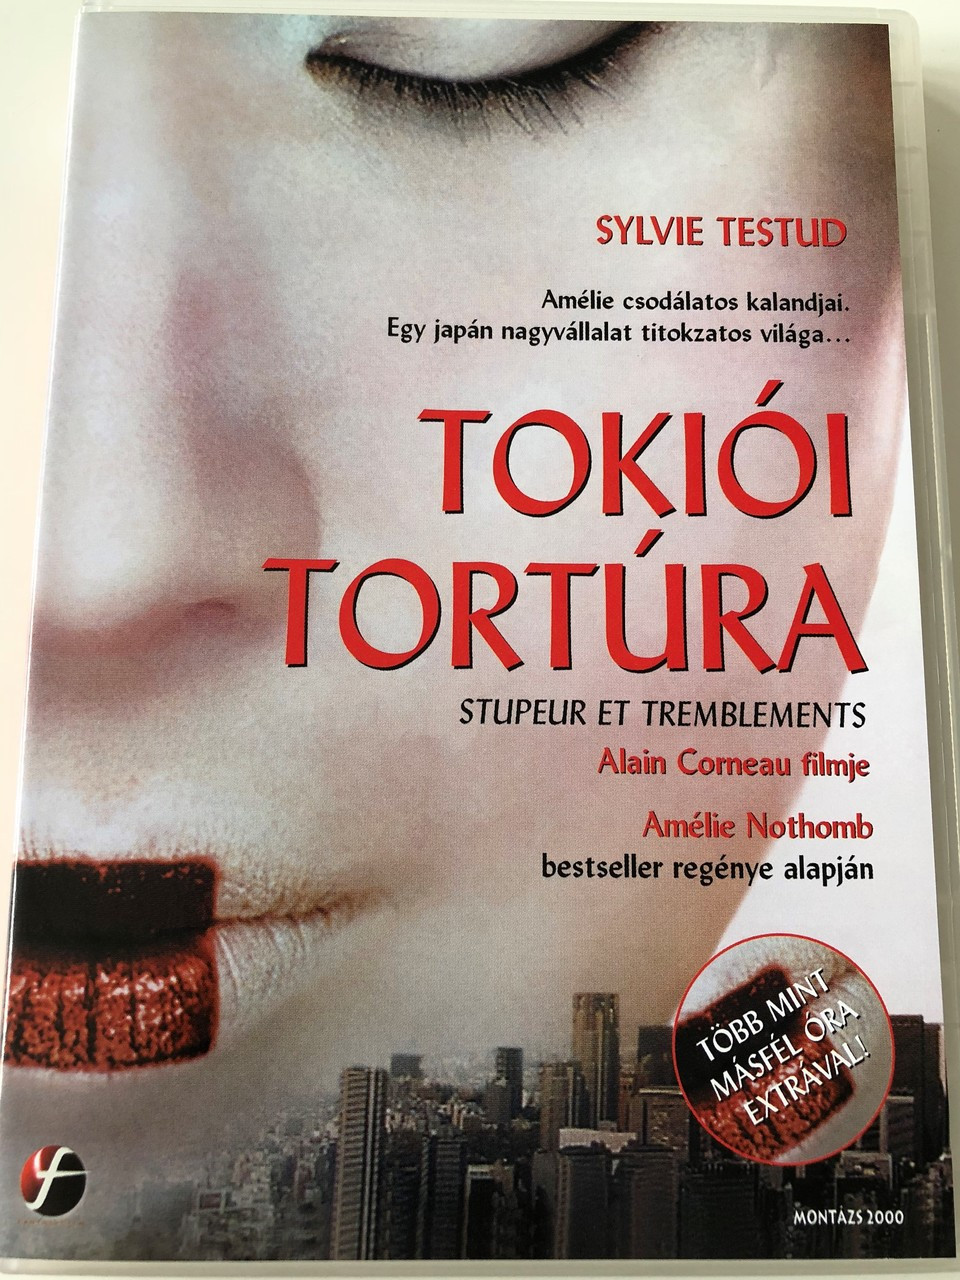 Stupeur et Tremblements DVD 2003 Tokiói Tortúra / Directed by Alain Corneau  / Starring: Sylvie Testud, Kaori Tsuji, Taro Suwa, Bison Katayama -  bibleinmylanguage